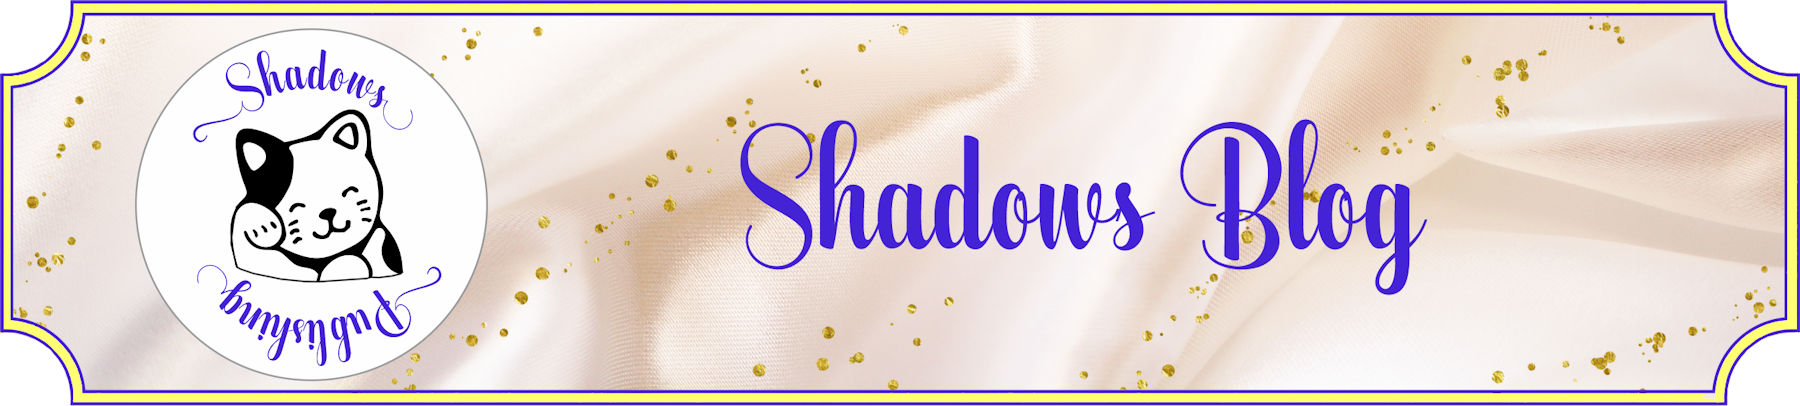 Shadows Blog